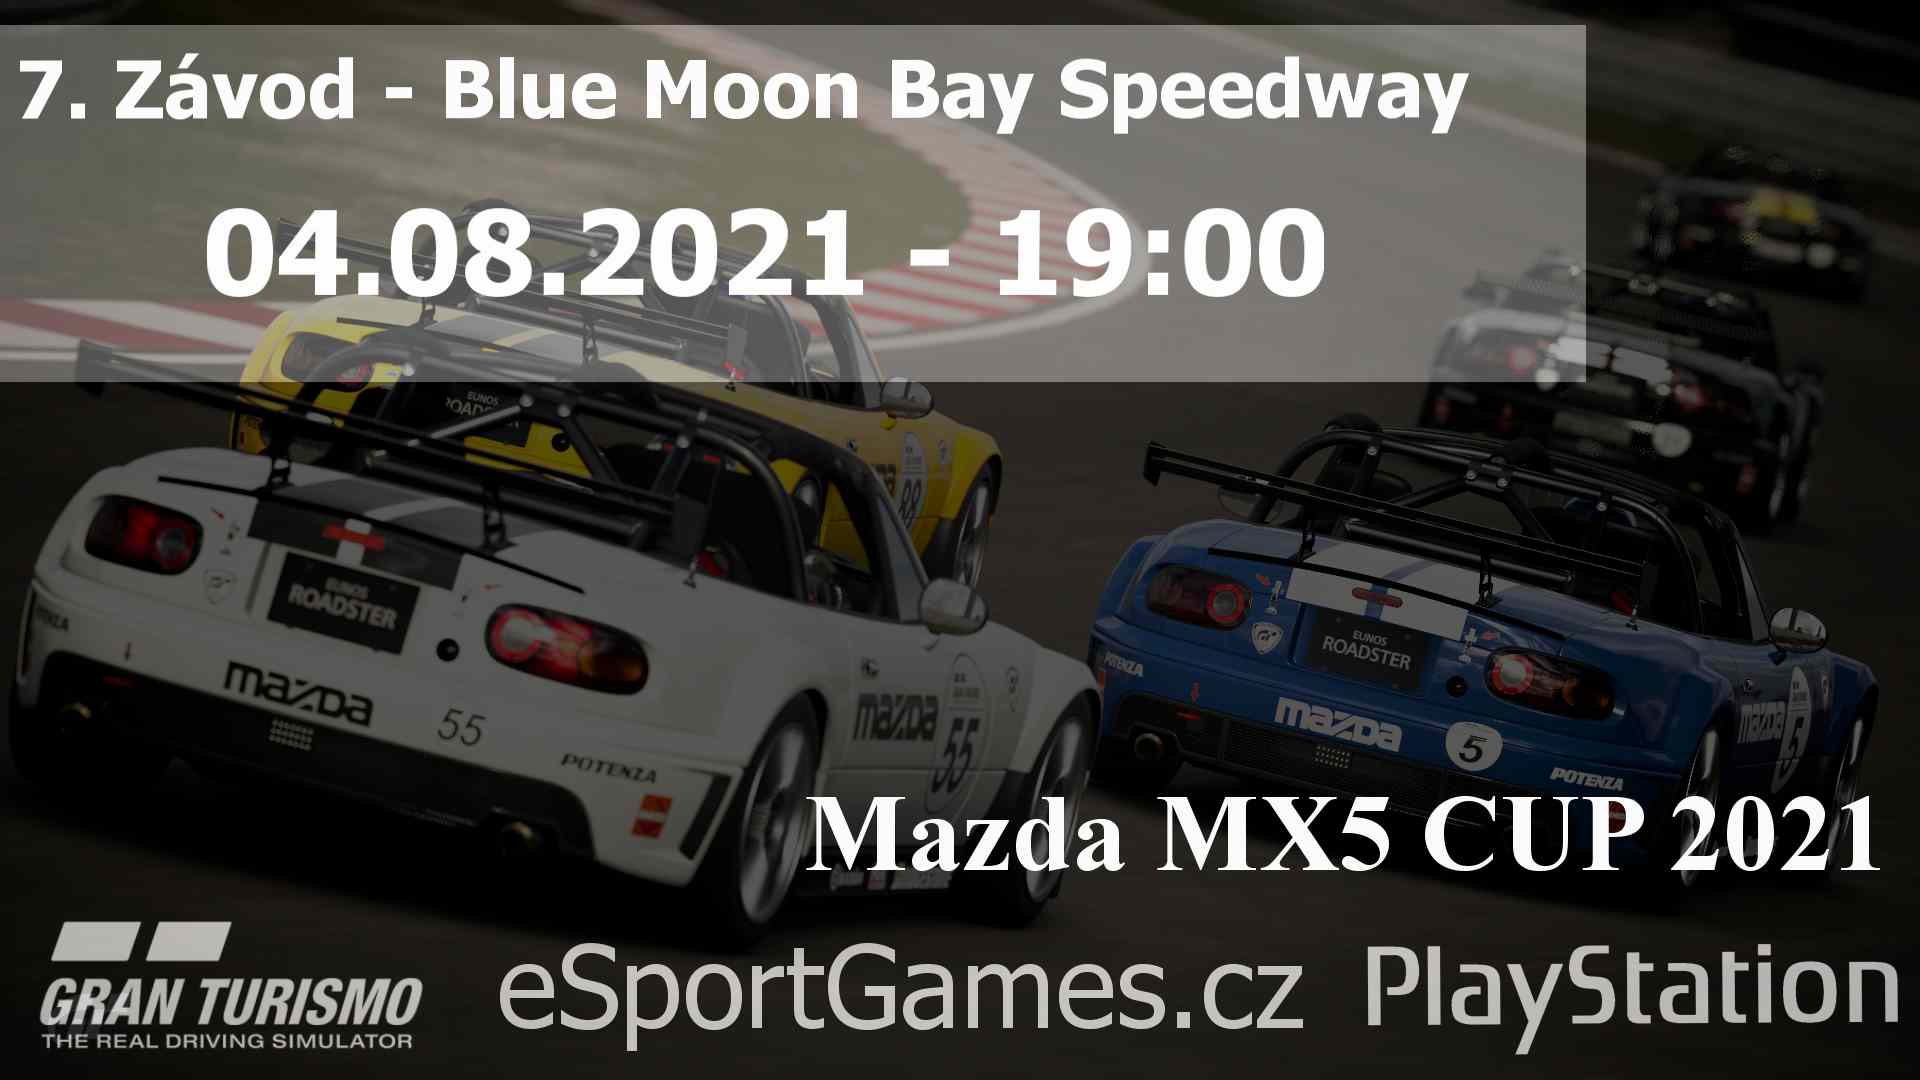 7. Závod - MX5 CUP 2021 - Blue Moon Bay Speedway